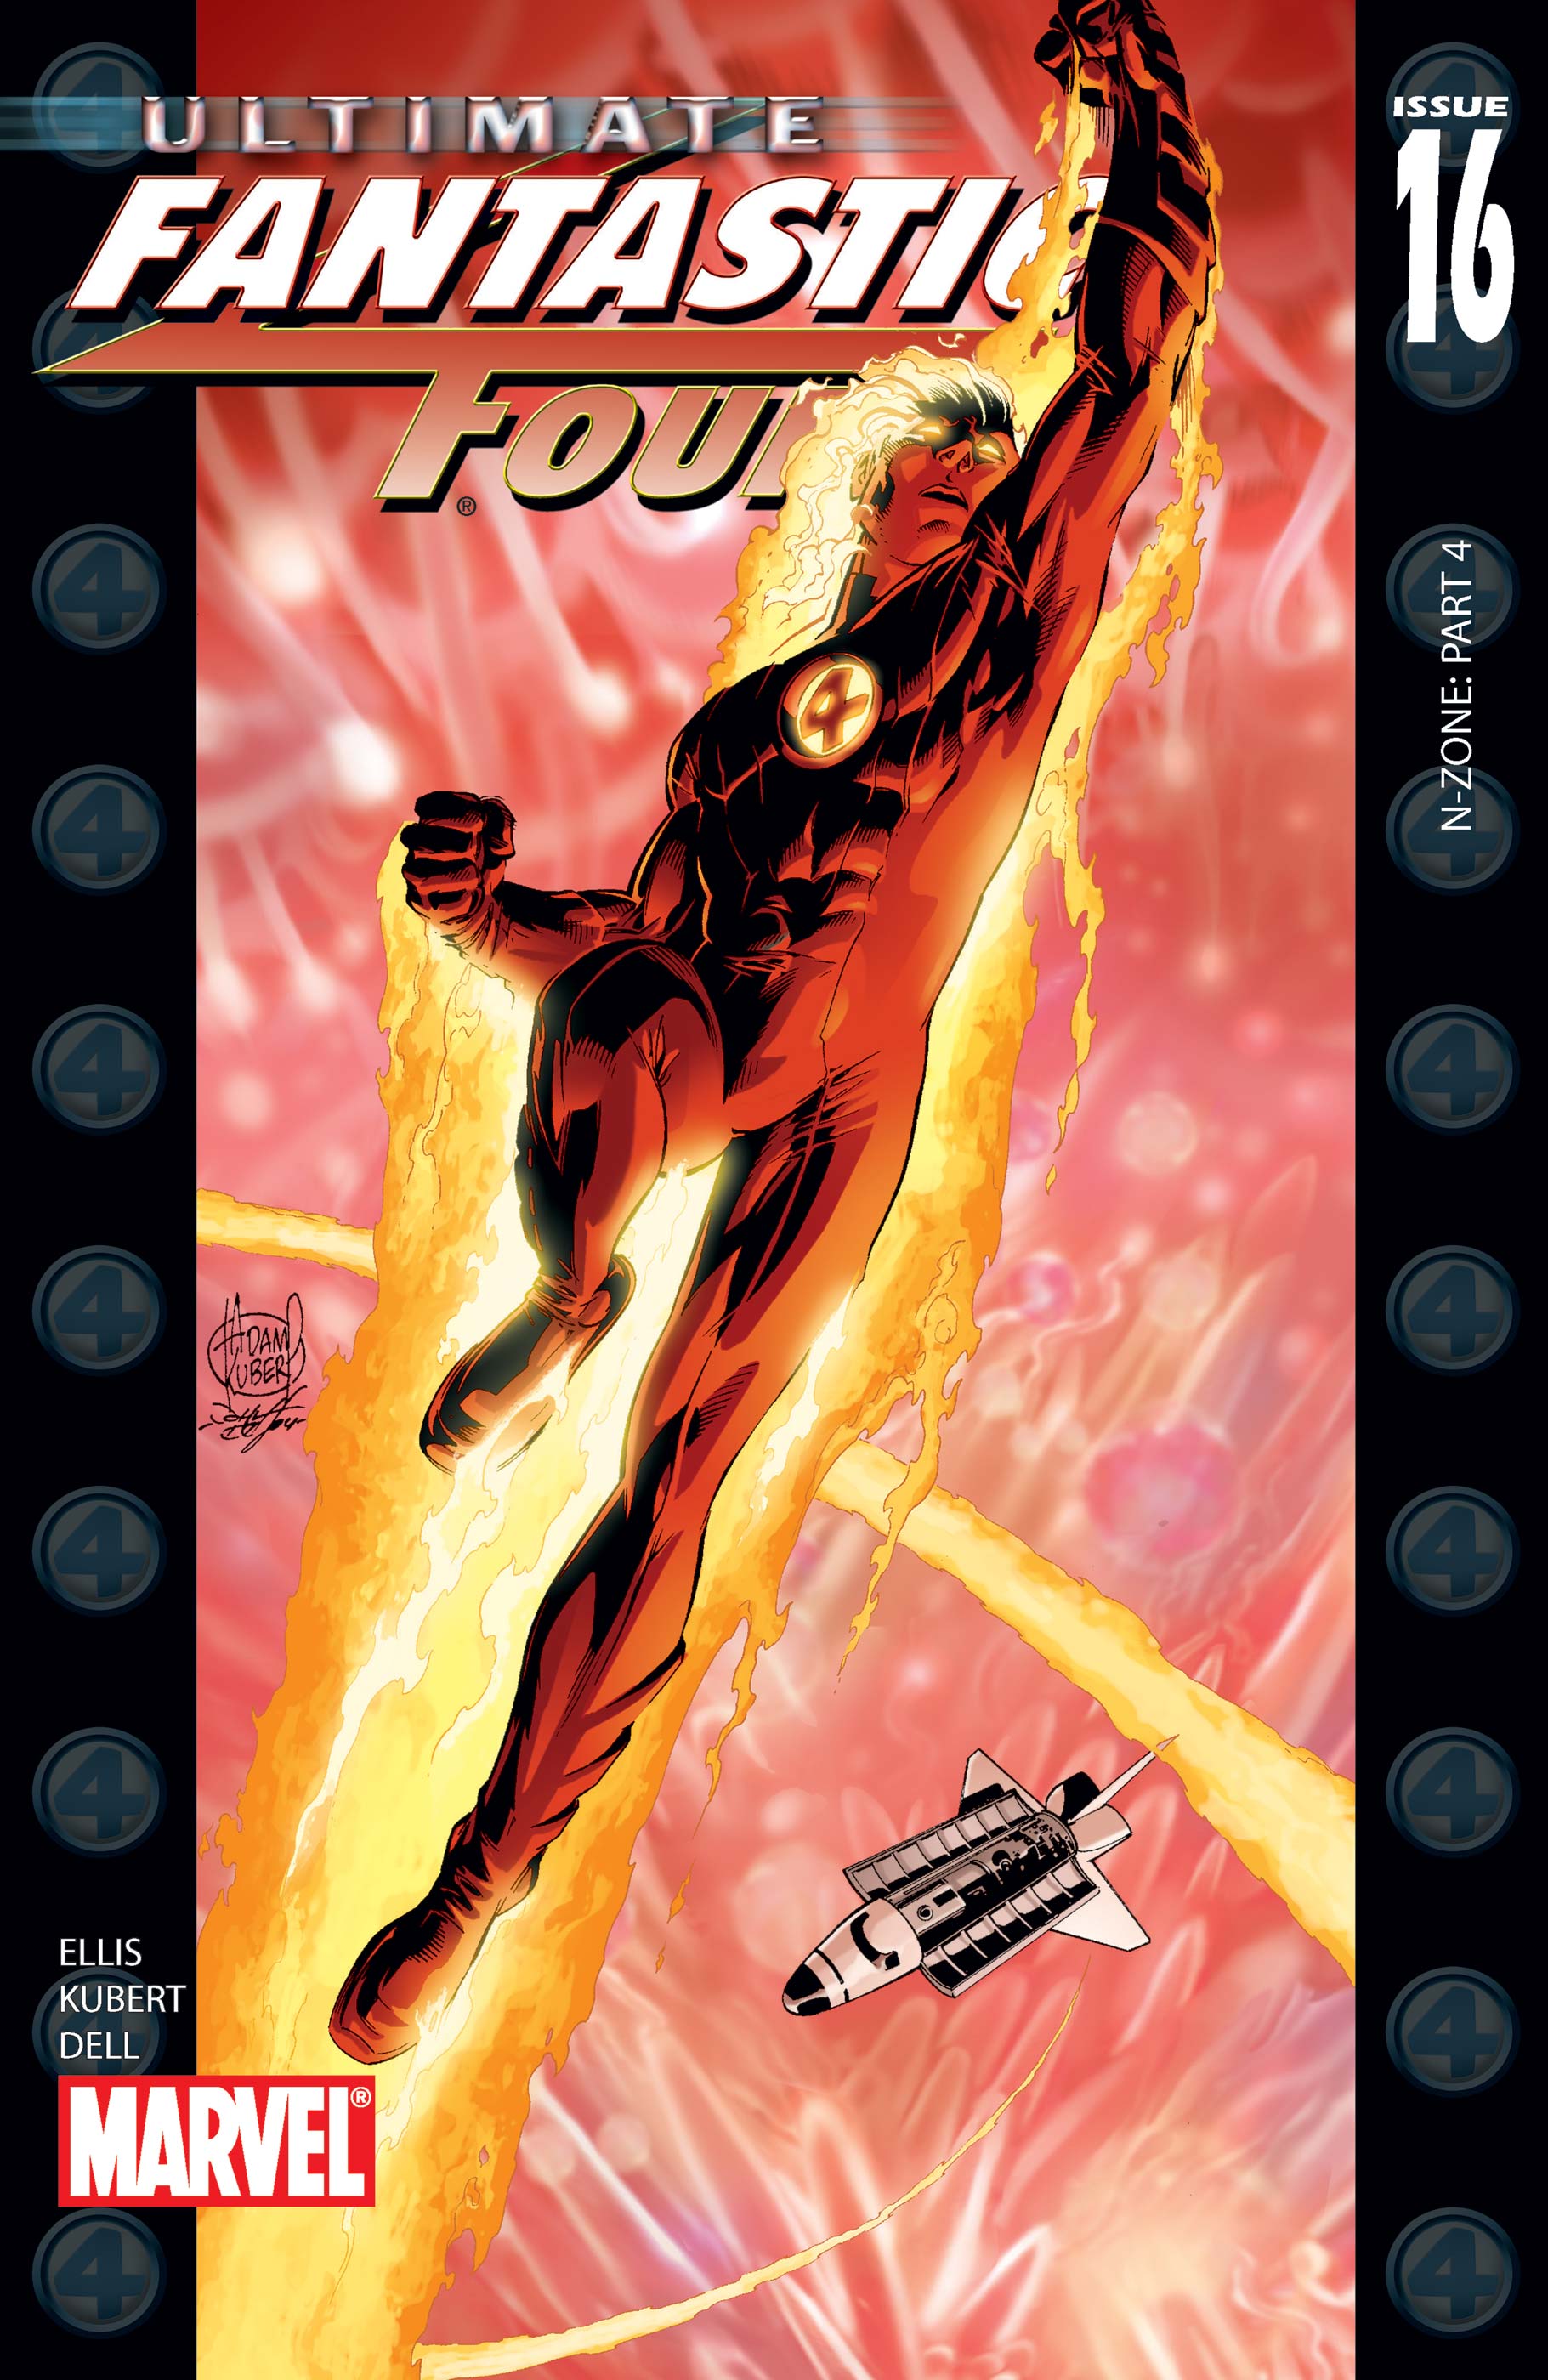 Ultimate Fantastic Four (2003) #16